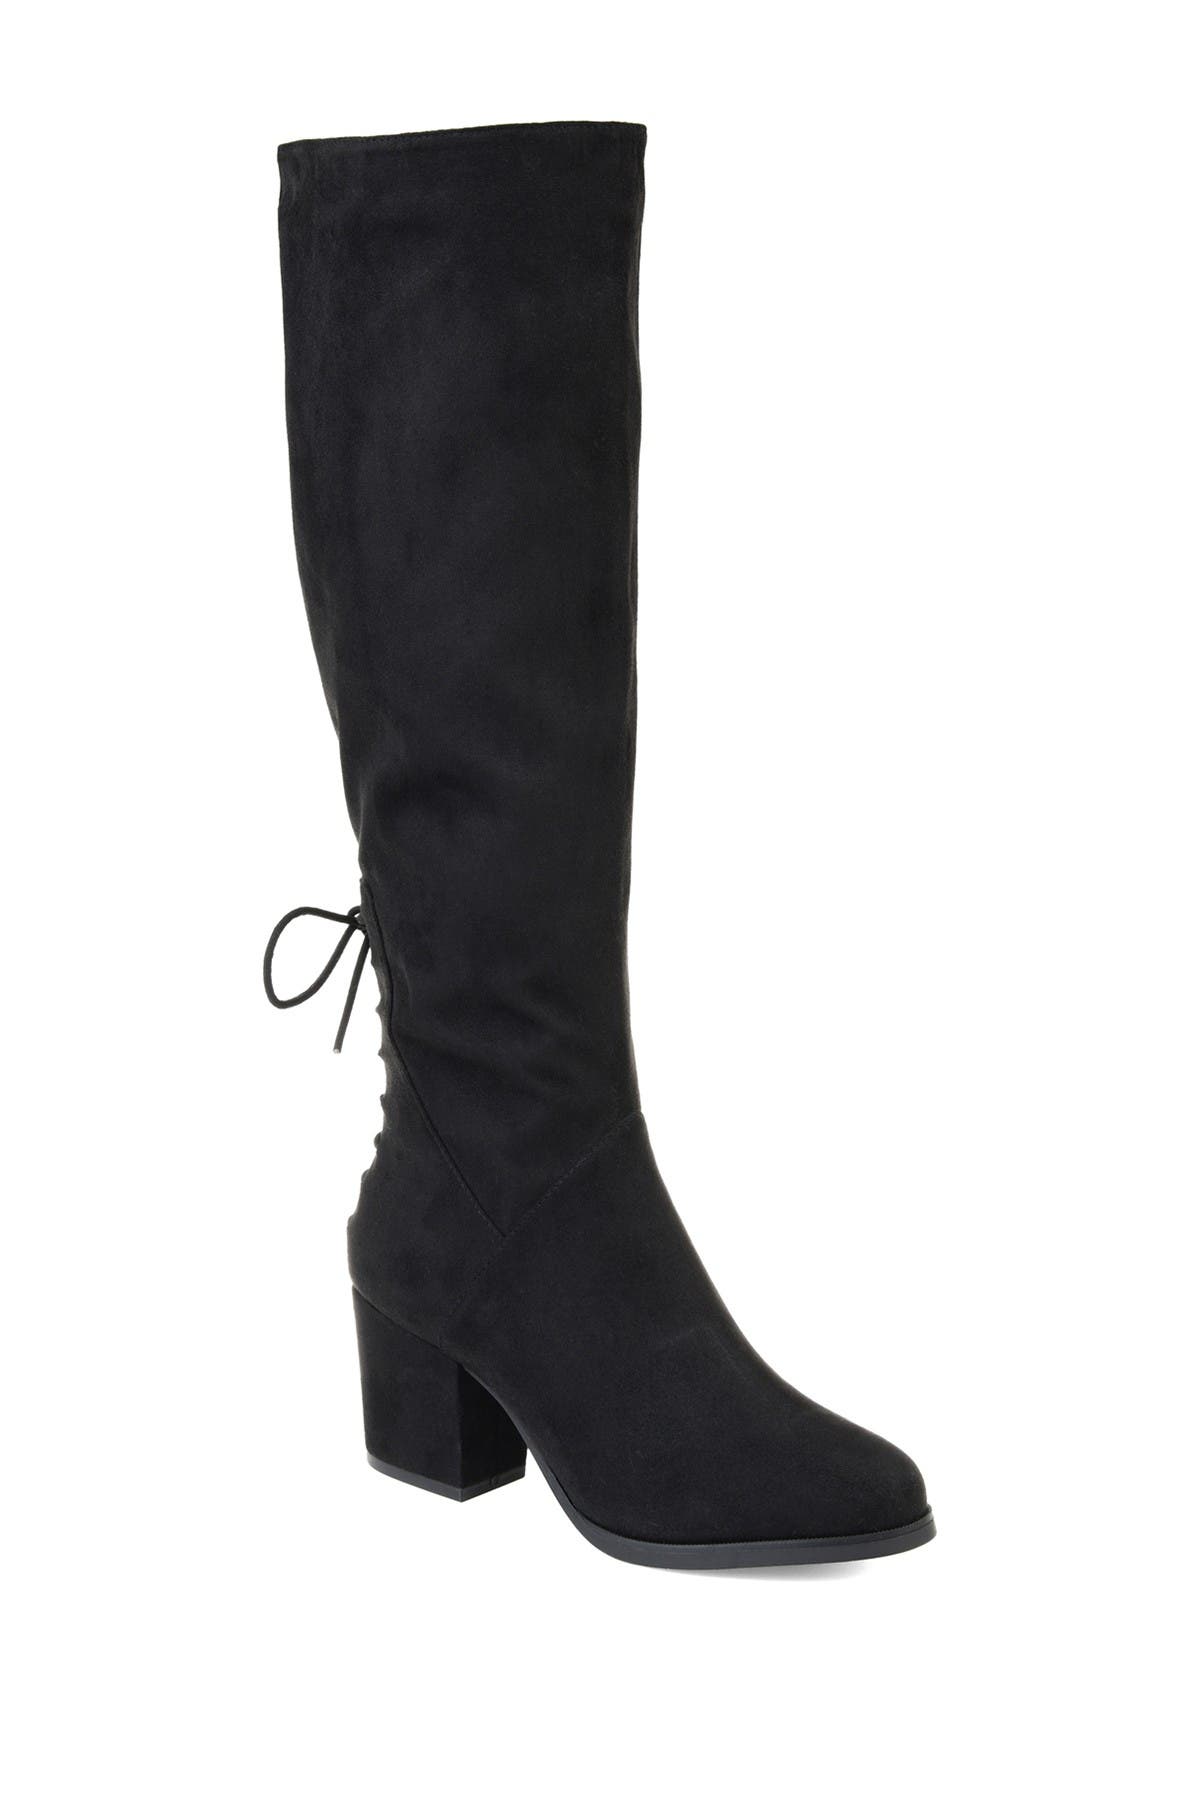 wide calf black heeled boots